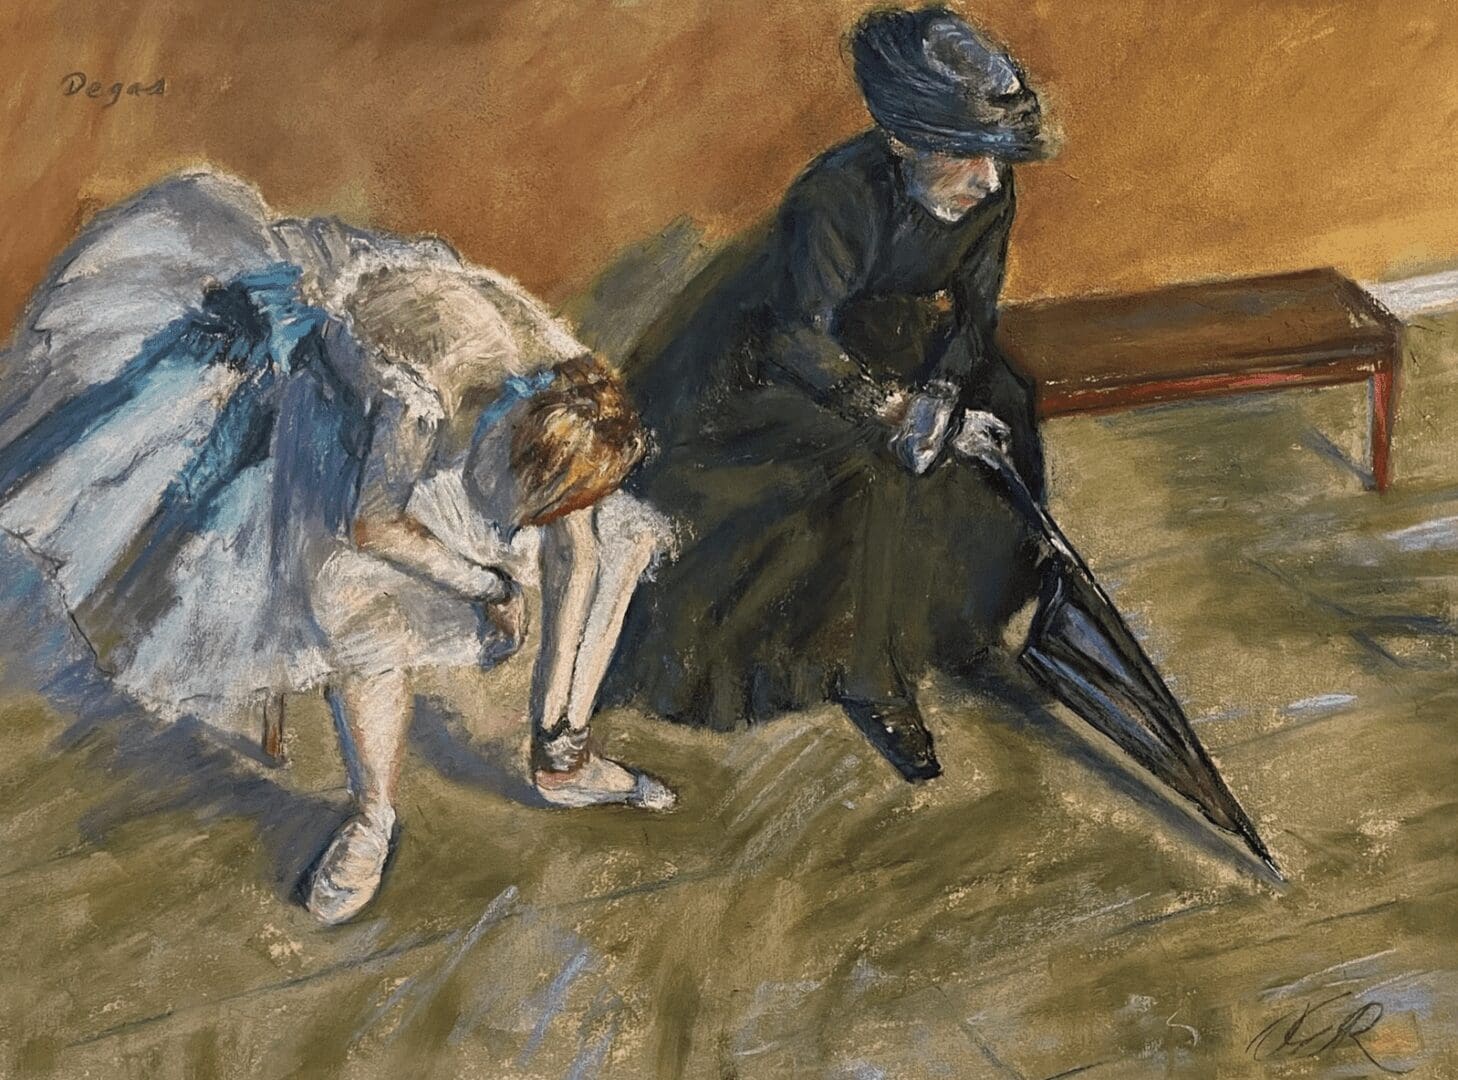 Edgar degas - two women with umbrellas.